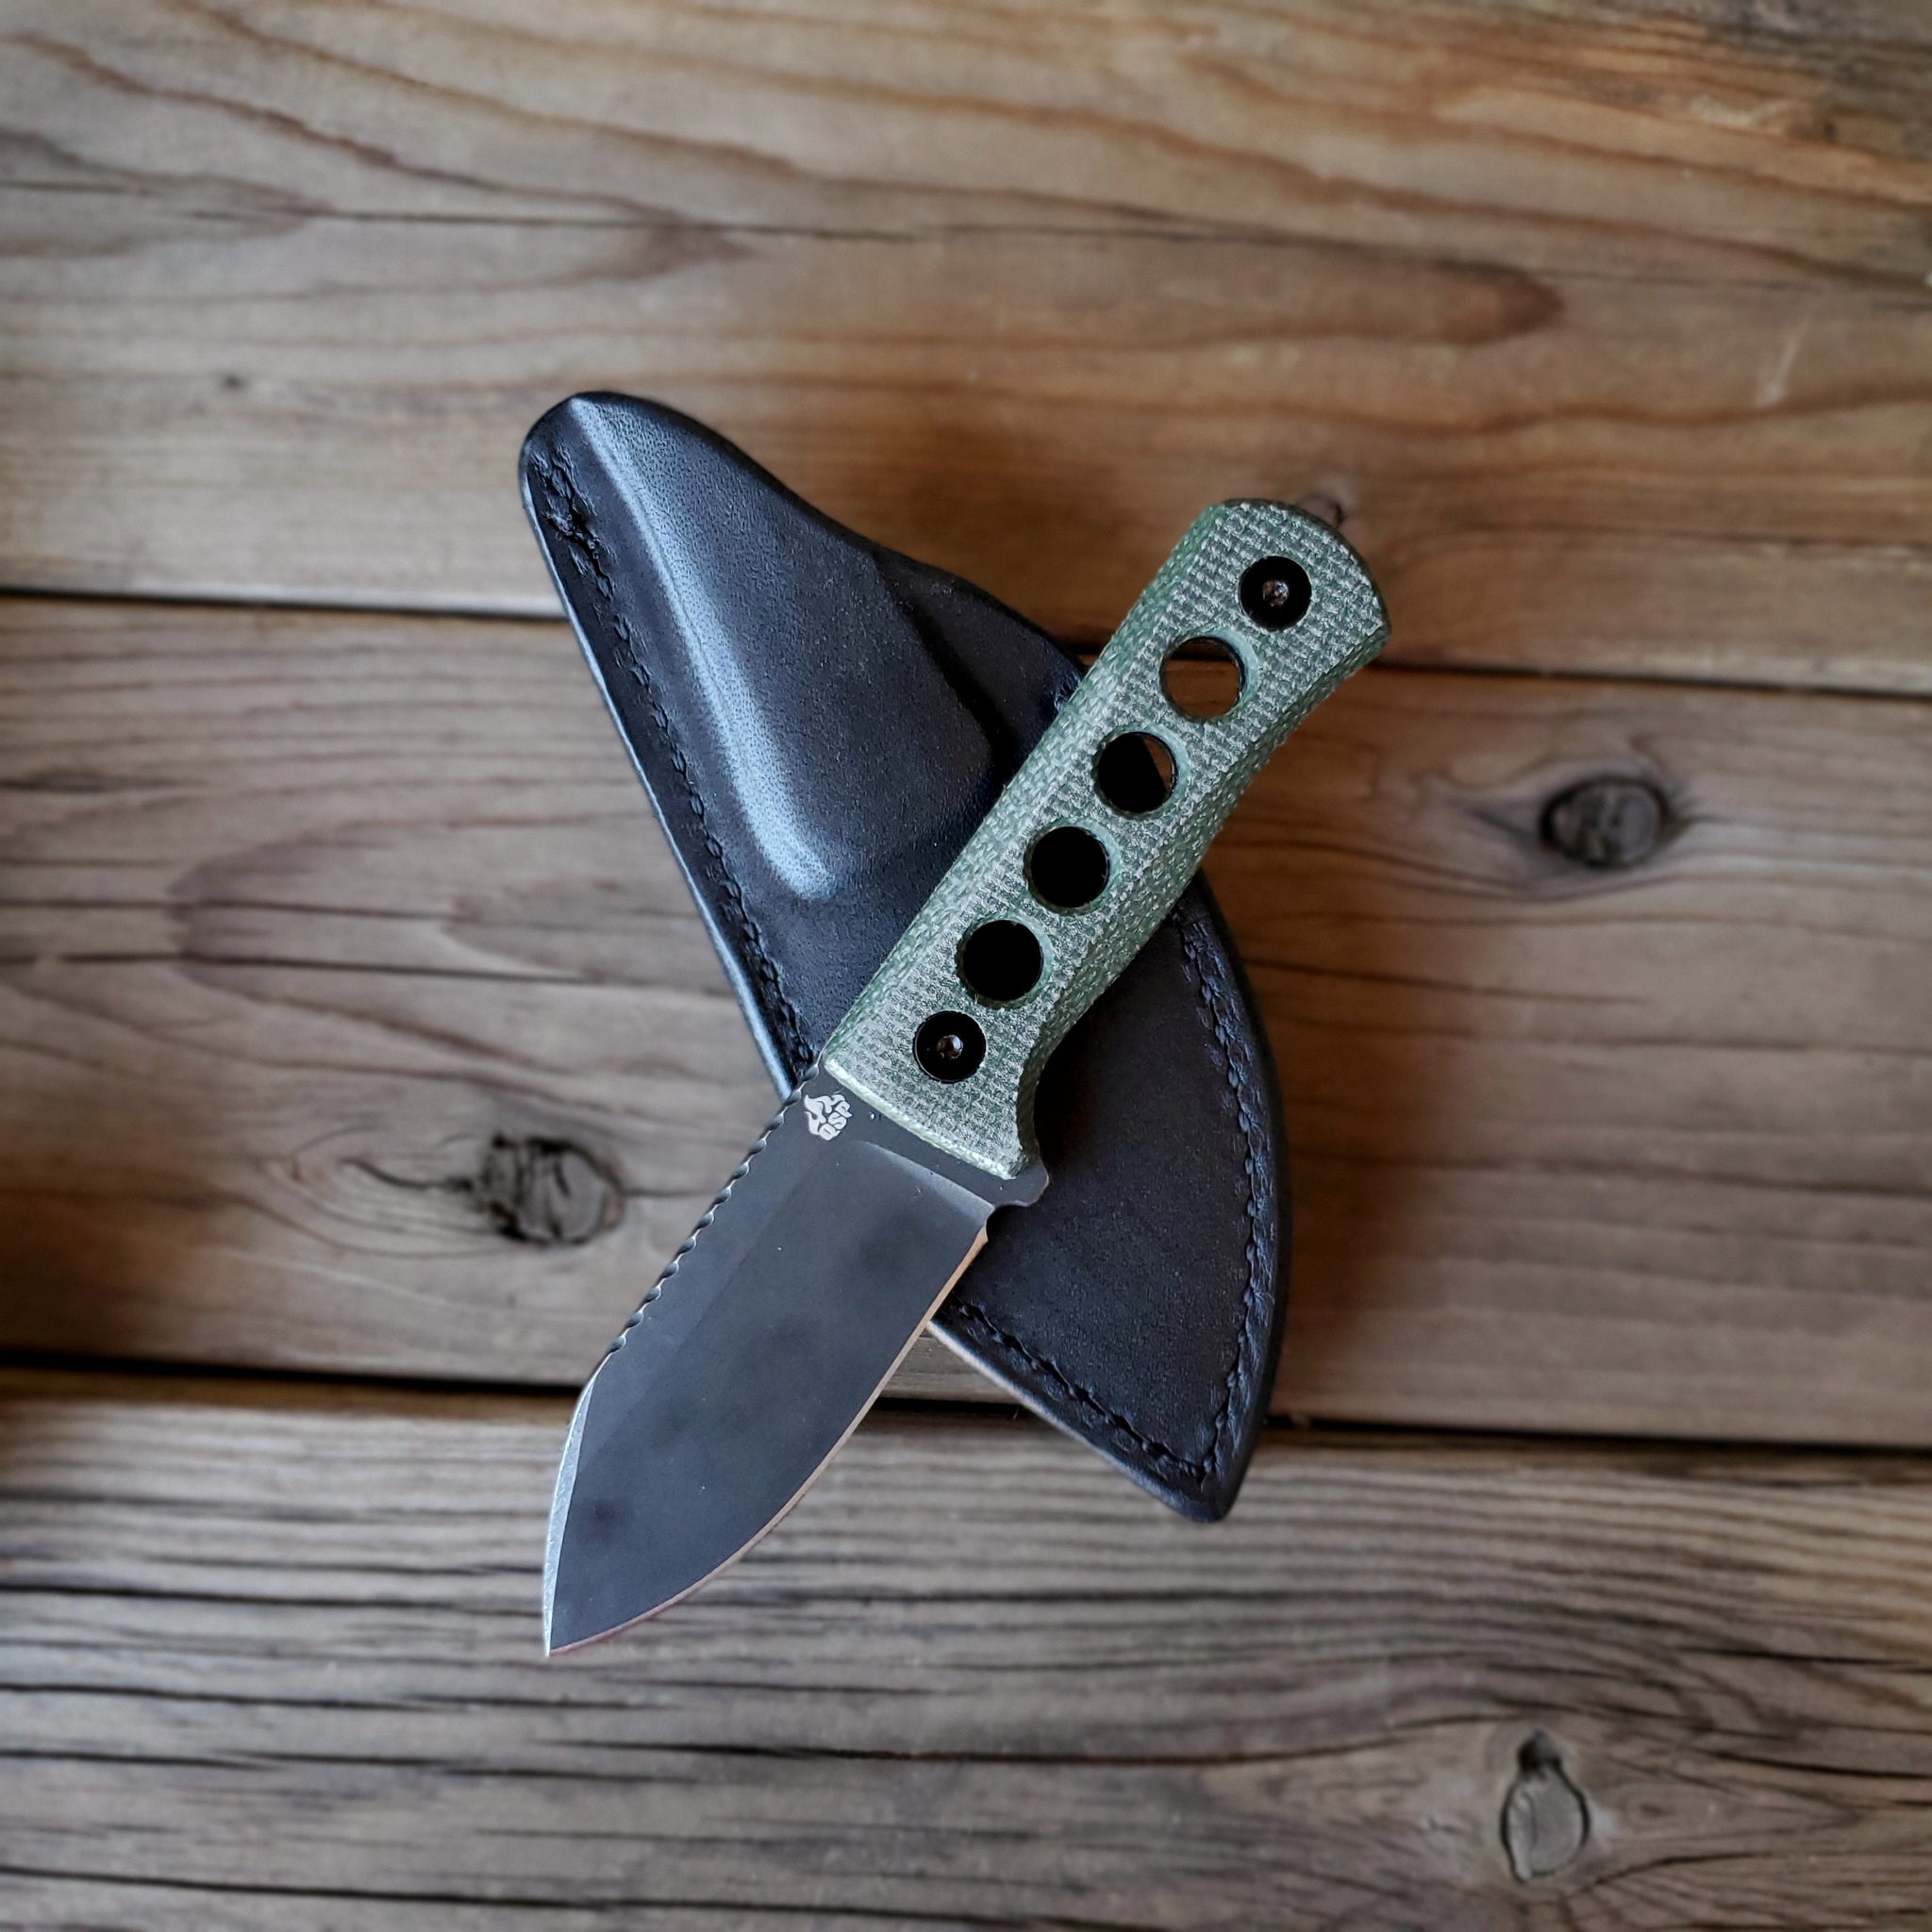 new sheath for custom knife. : r/Leathercraft